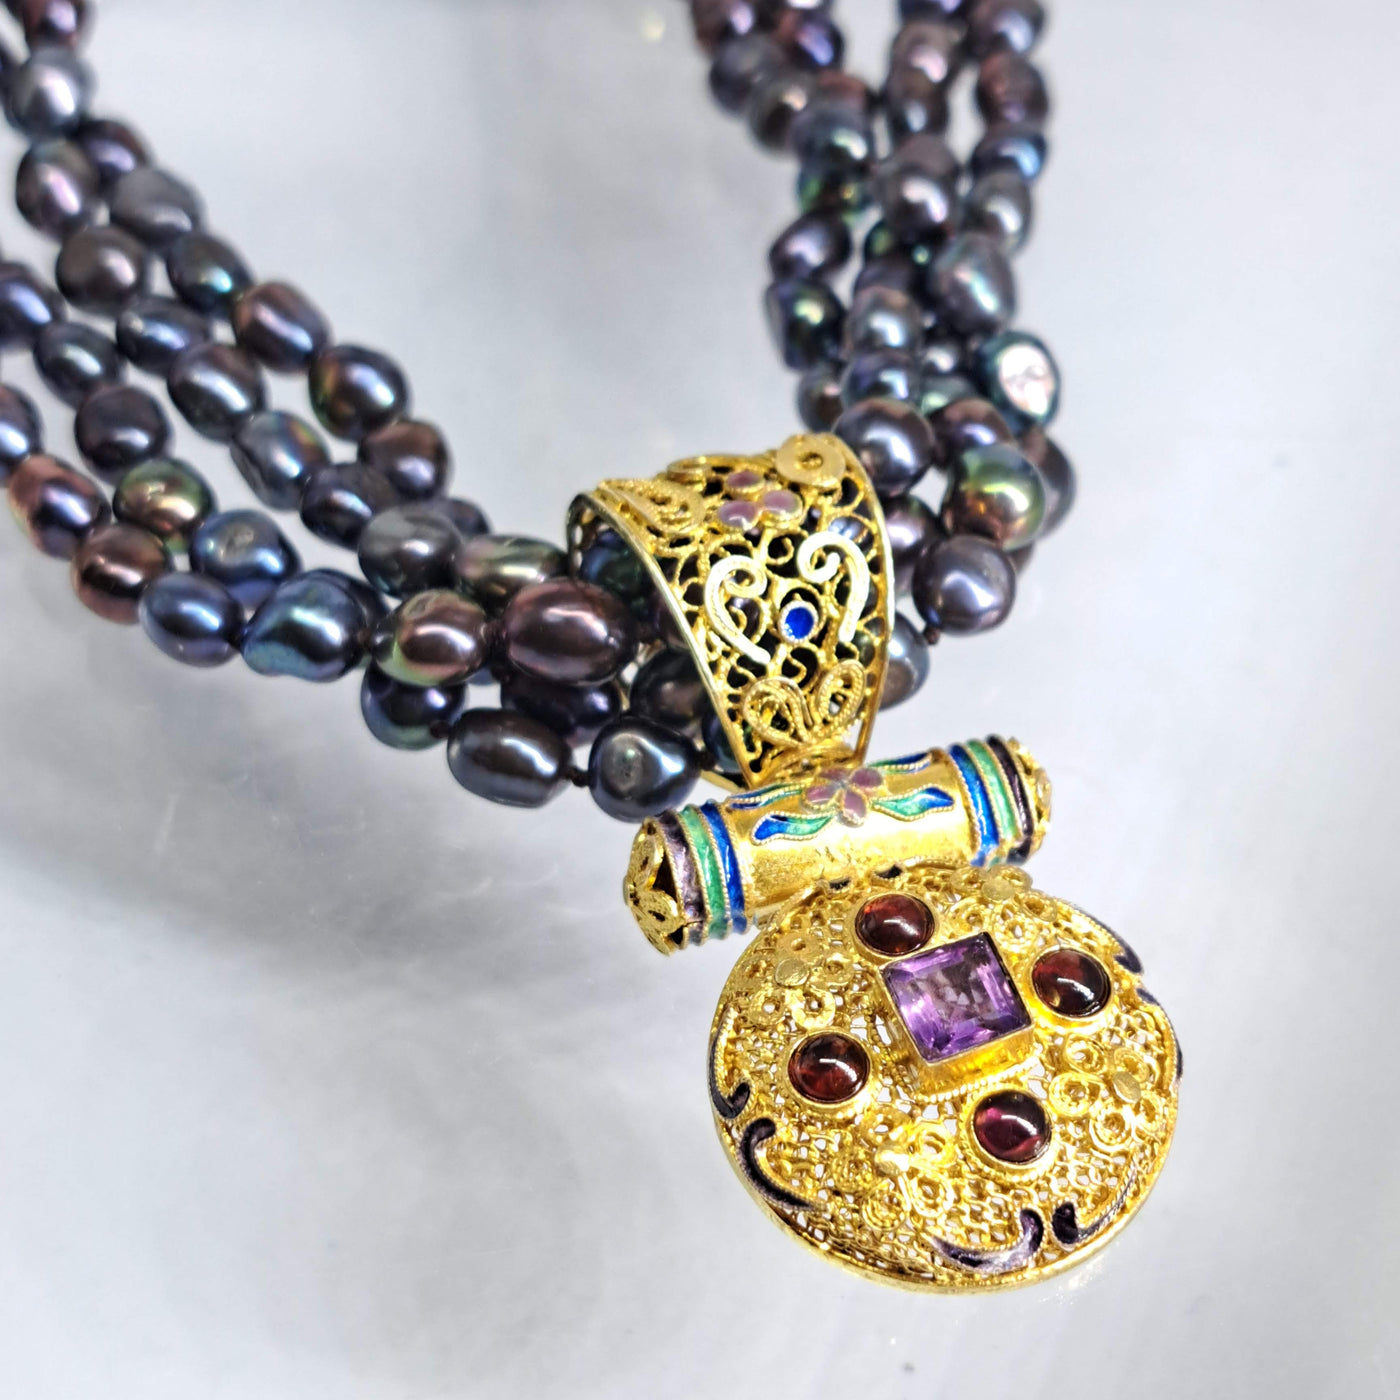 "Imperial Fruit" Pendant Necklace - Qing Dynasty Style, Garnet, Amethyst, Enamel, 22k Gold Sterling